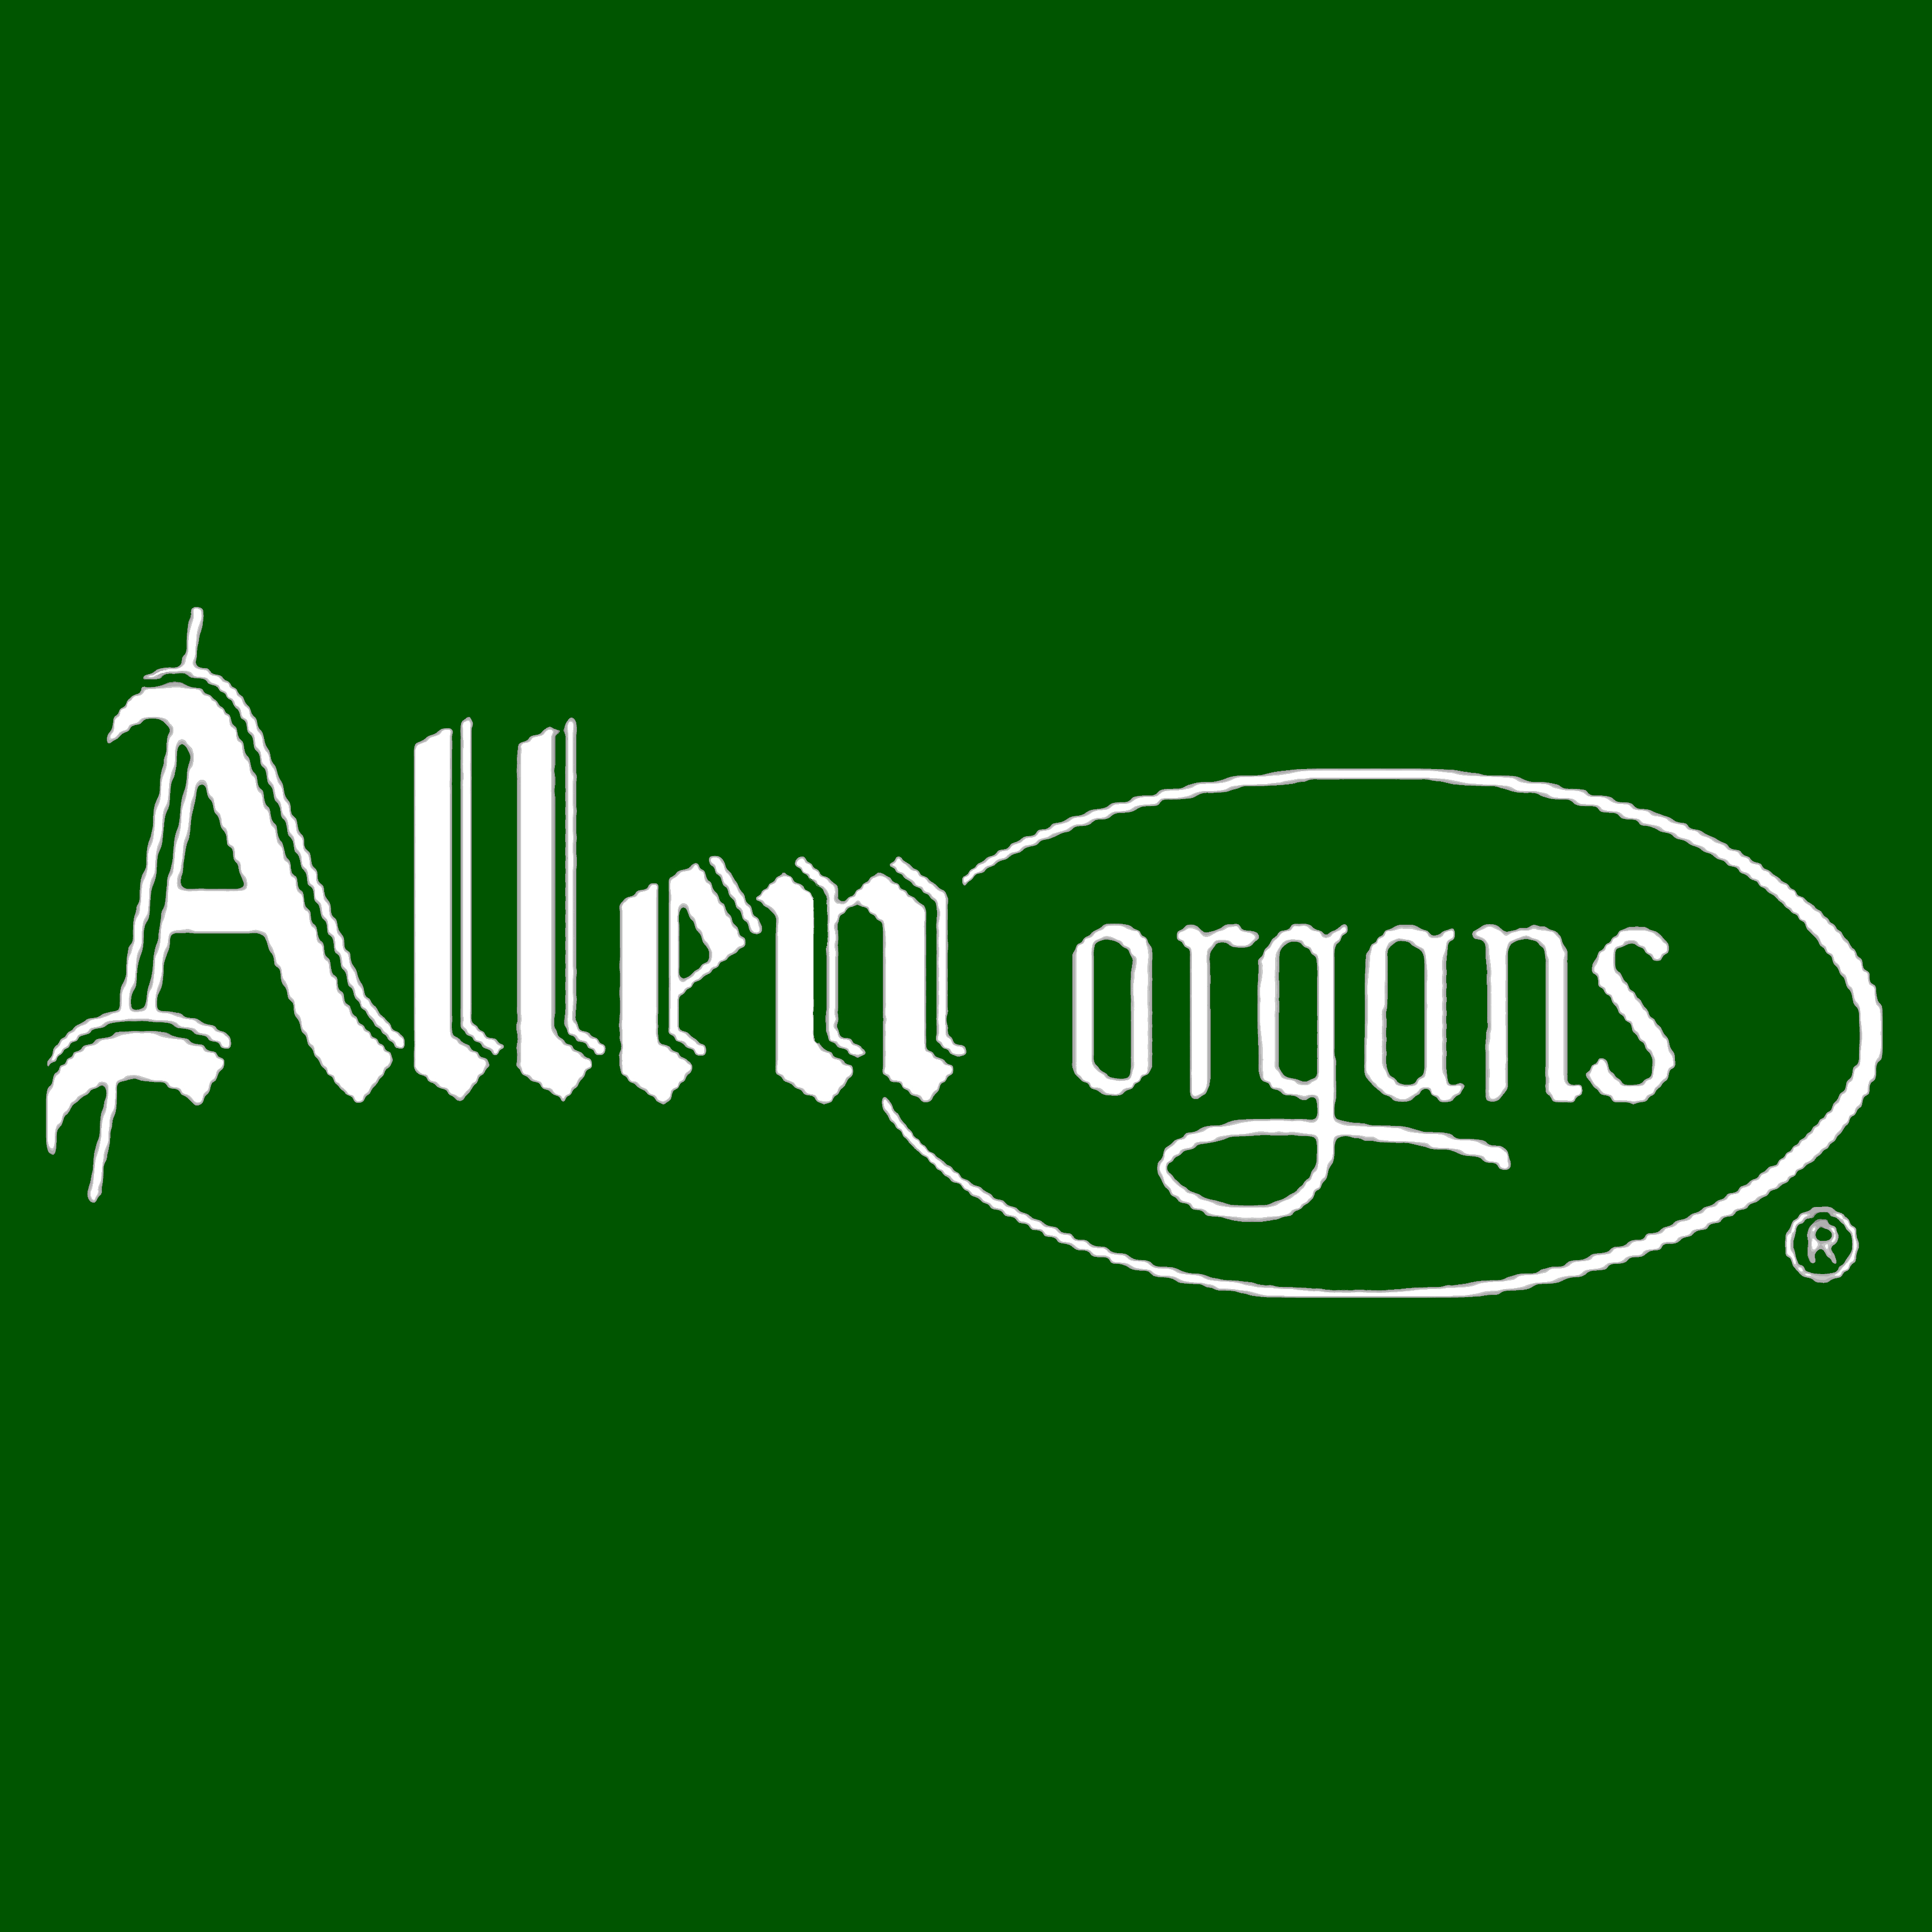 Allen Digital Computer Organ Studios WA Melville